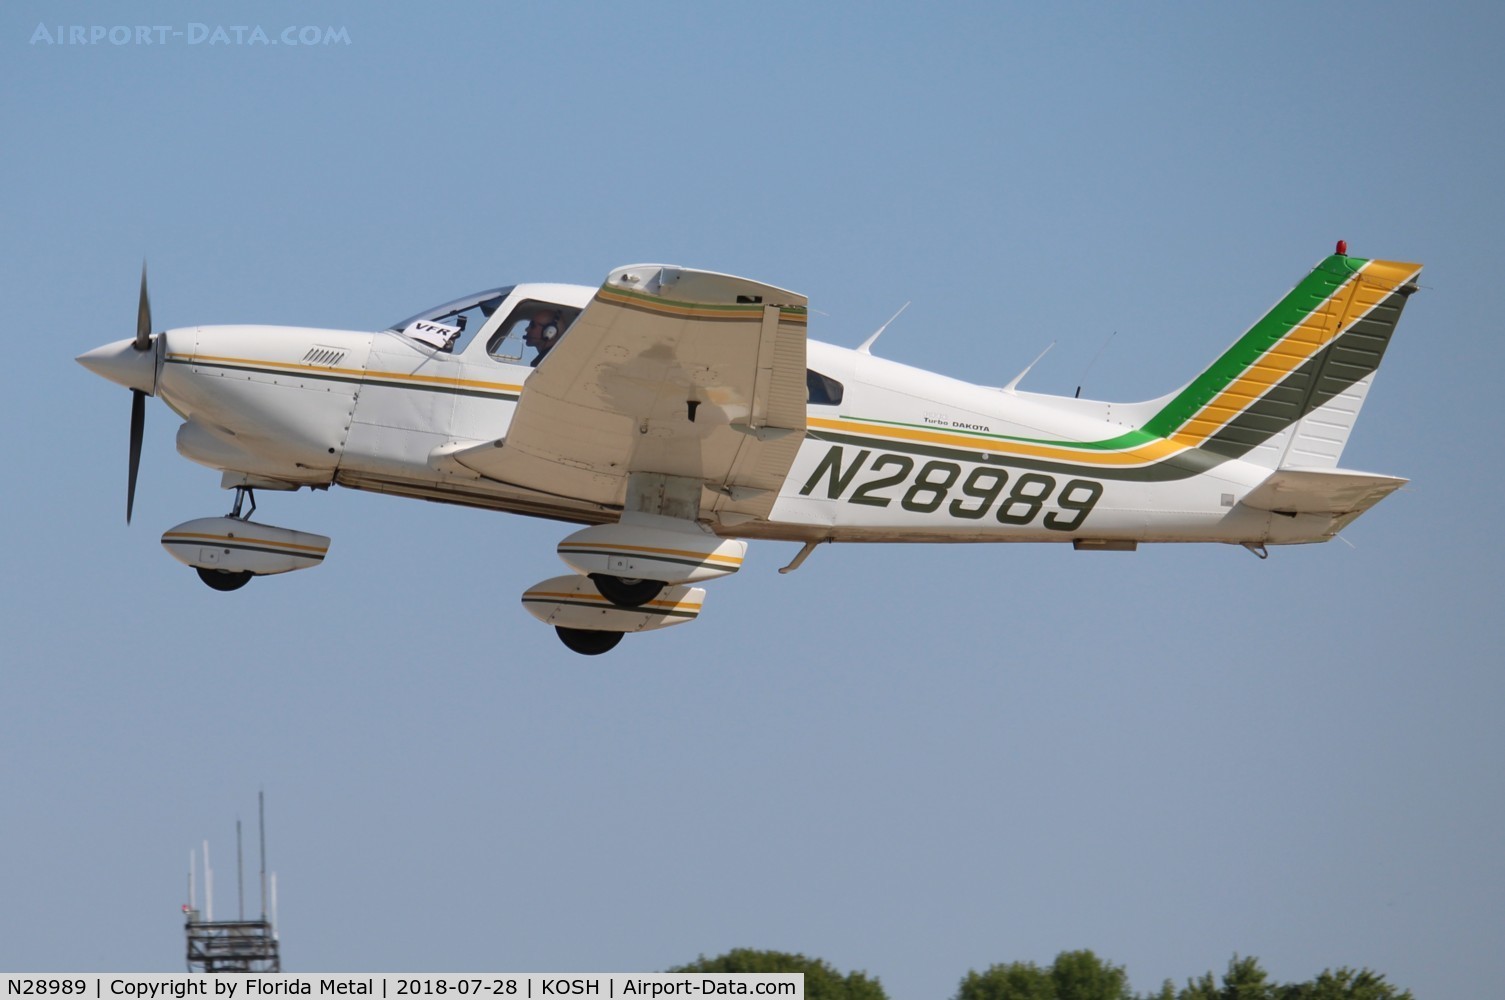 N28989, 1979 Piper PA-28-201T Turbo Dakota C/N 28-7921030, PA-28-201T